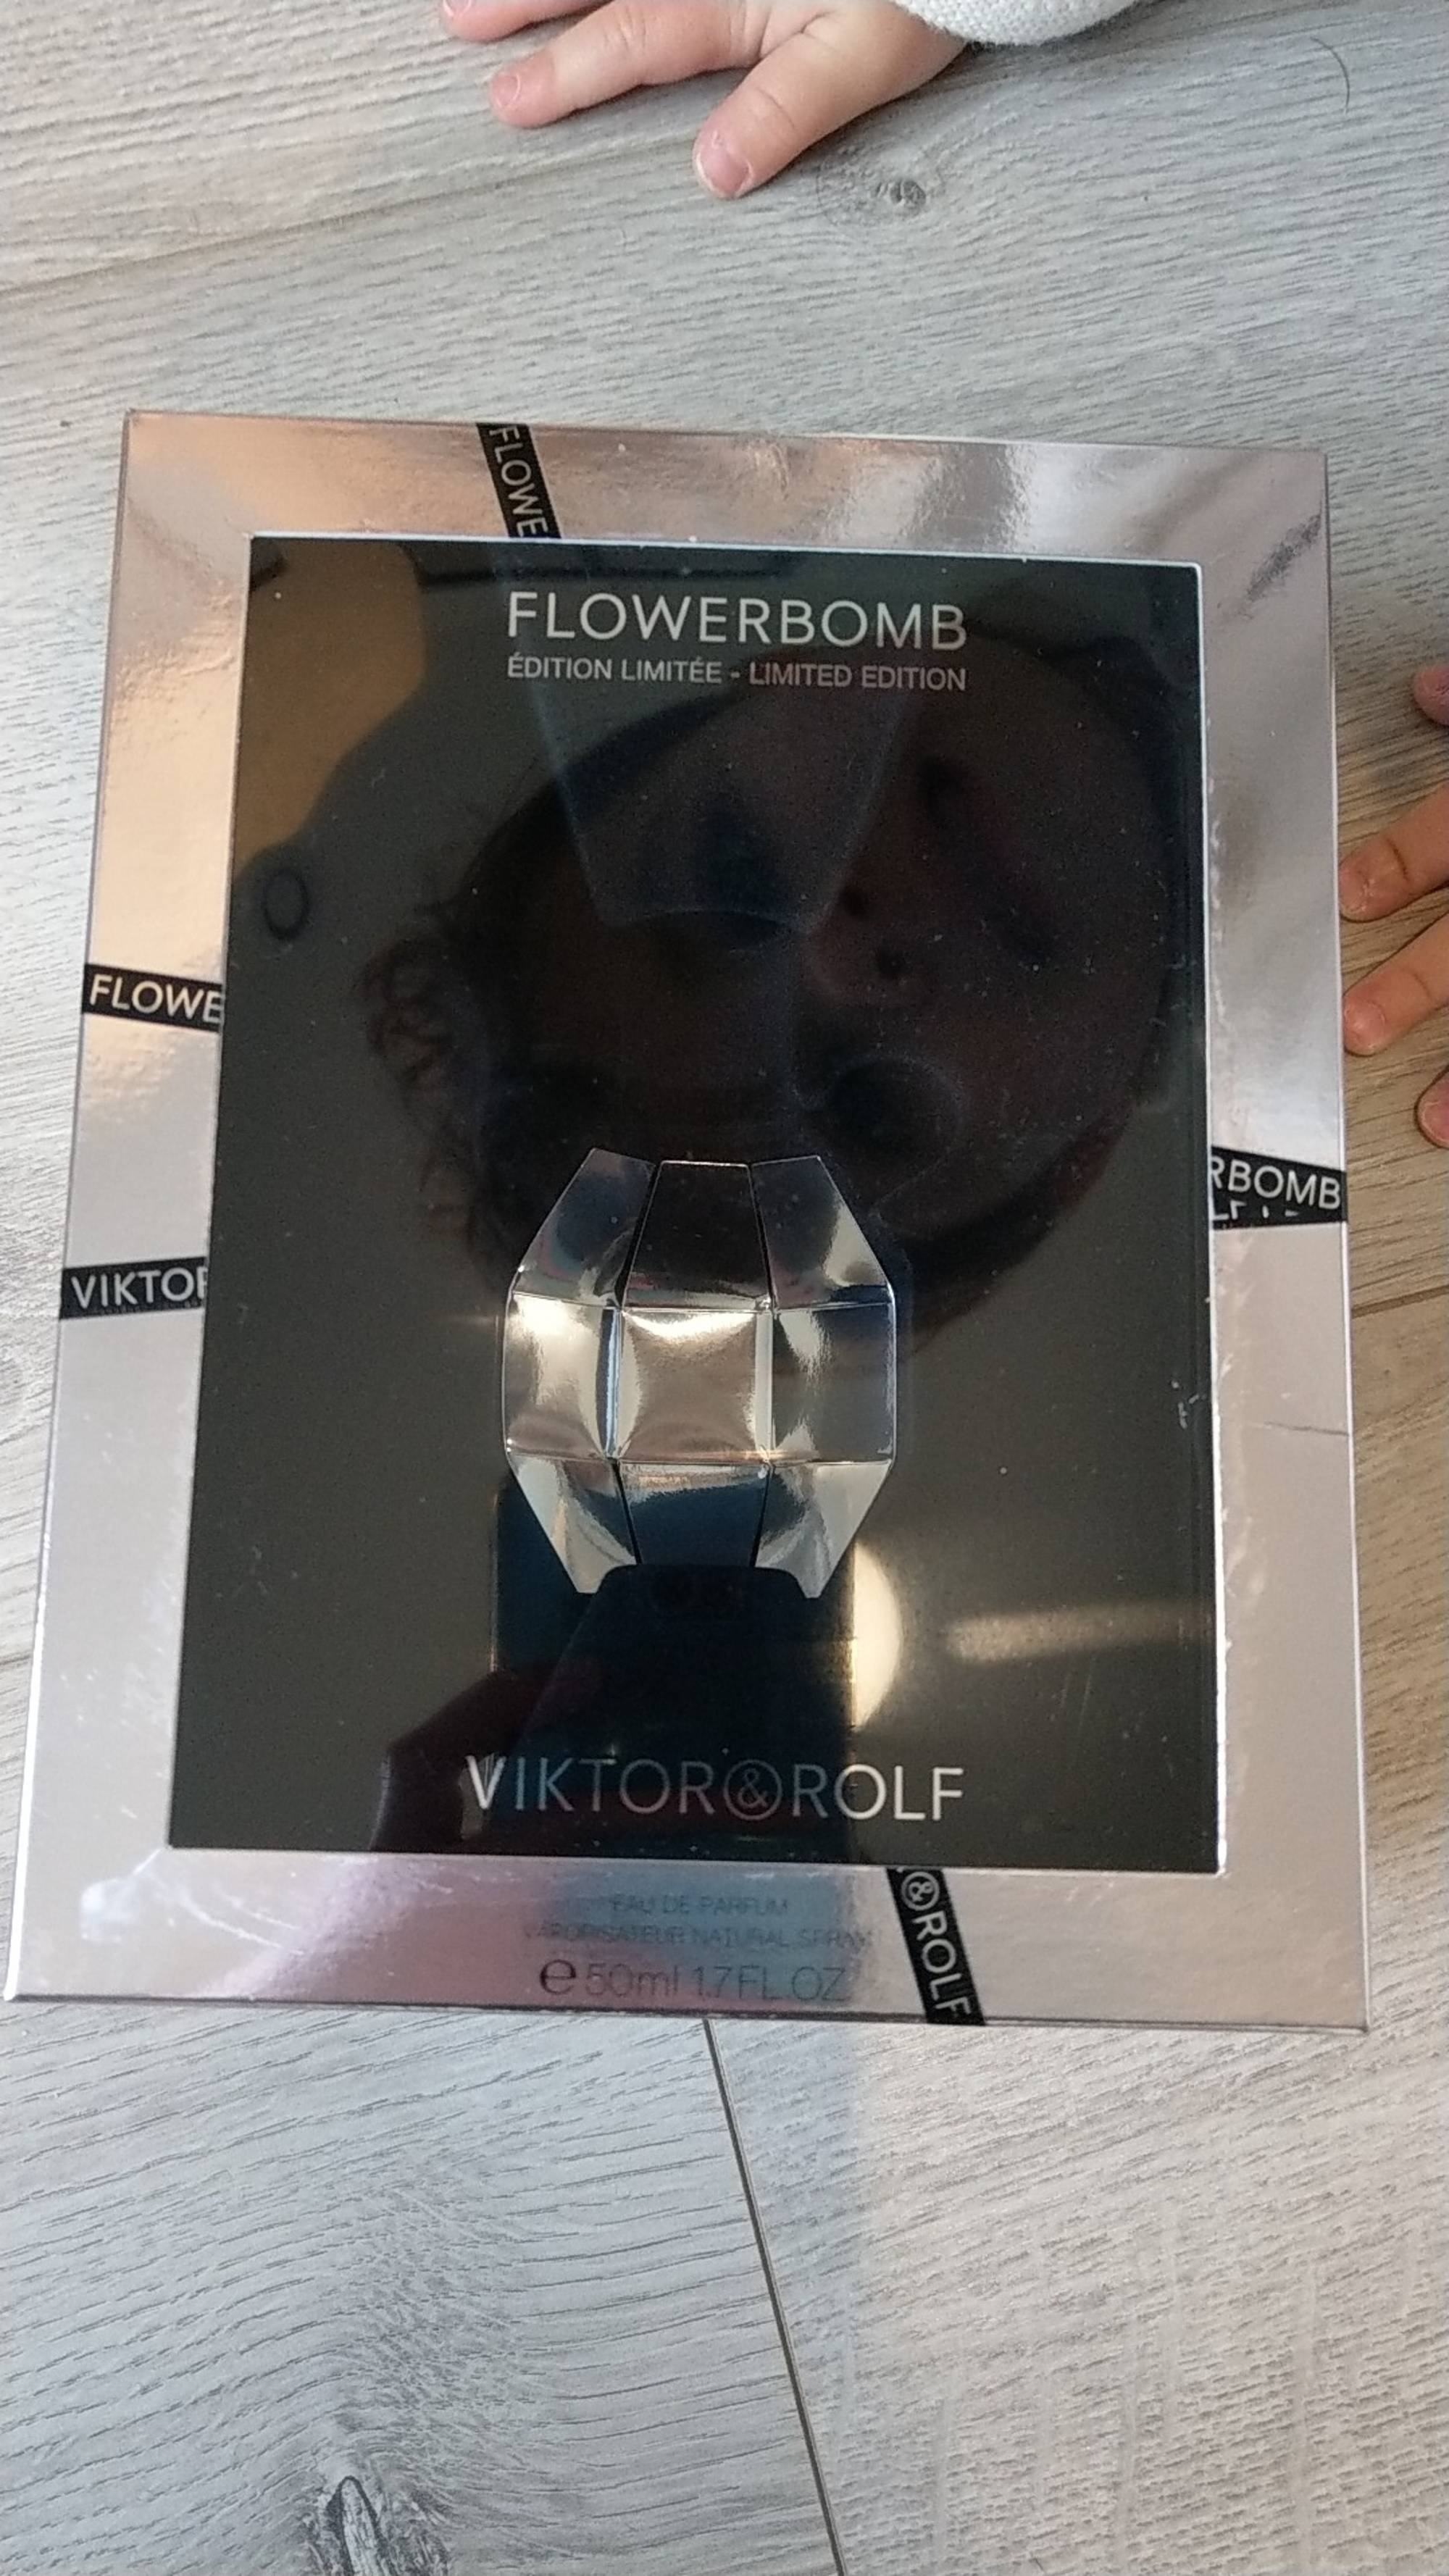 VIKTOR & ROLF - Flowerbomb - Eau de parfum